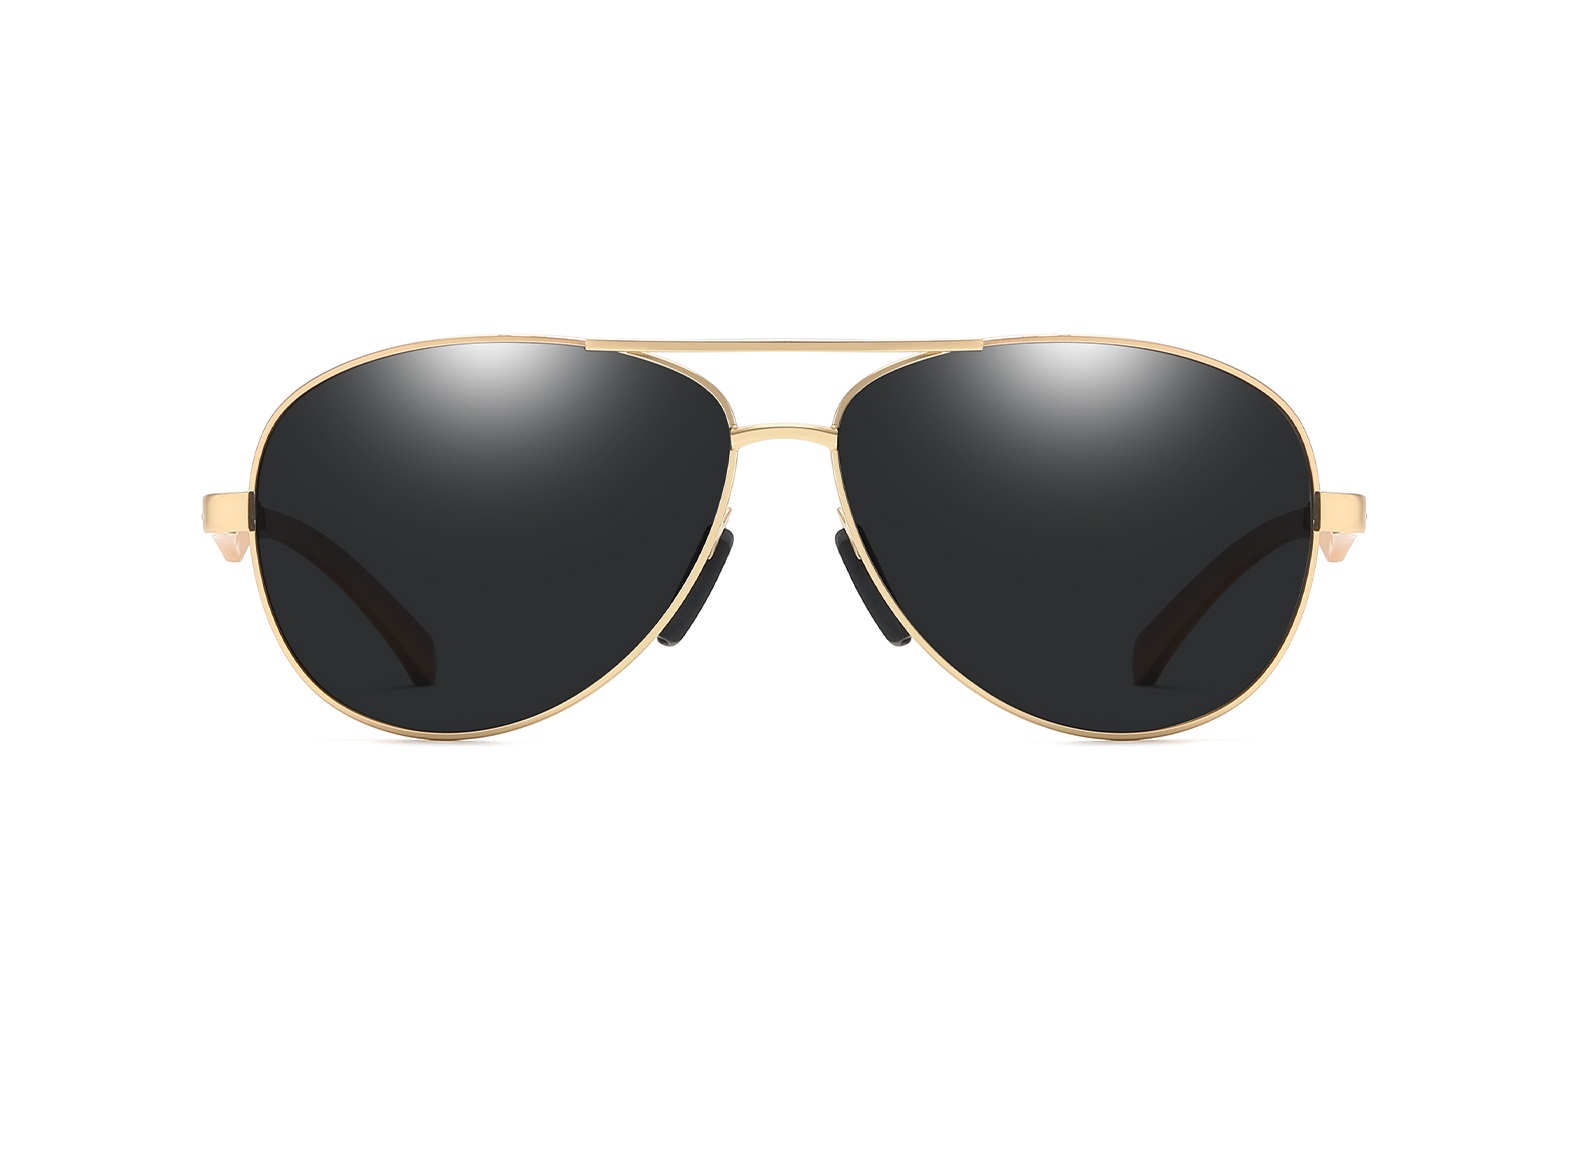 Sunglasses Original For Men Polarized UV400 Protection With Full Set